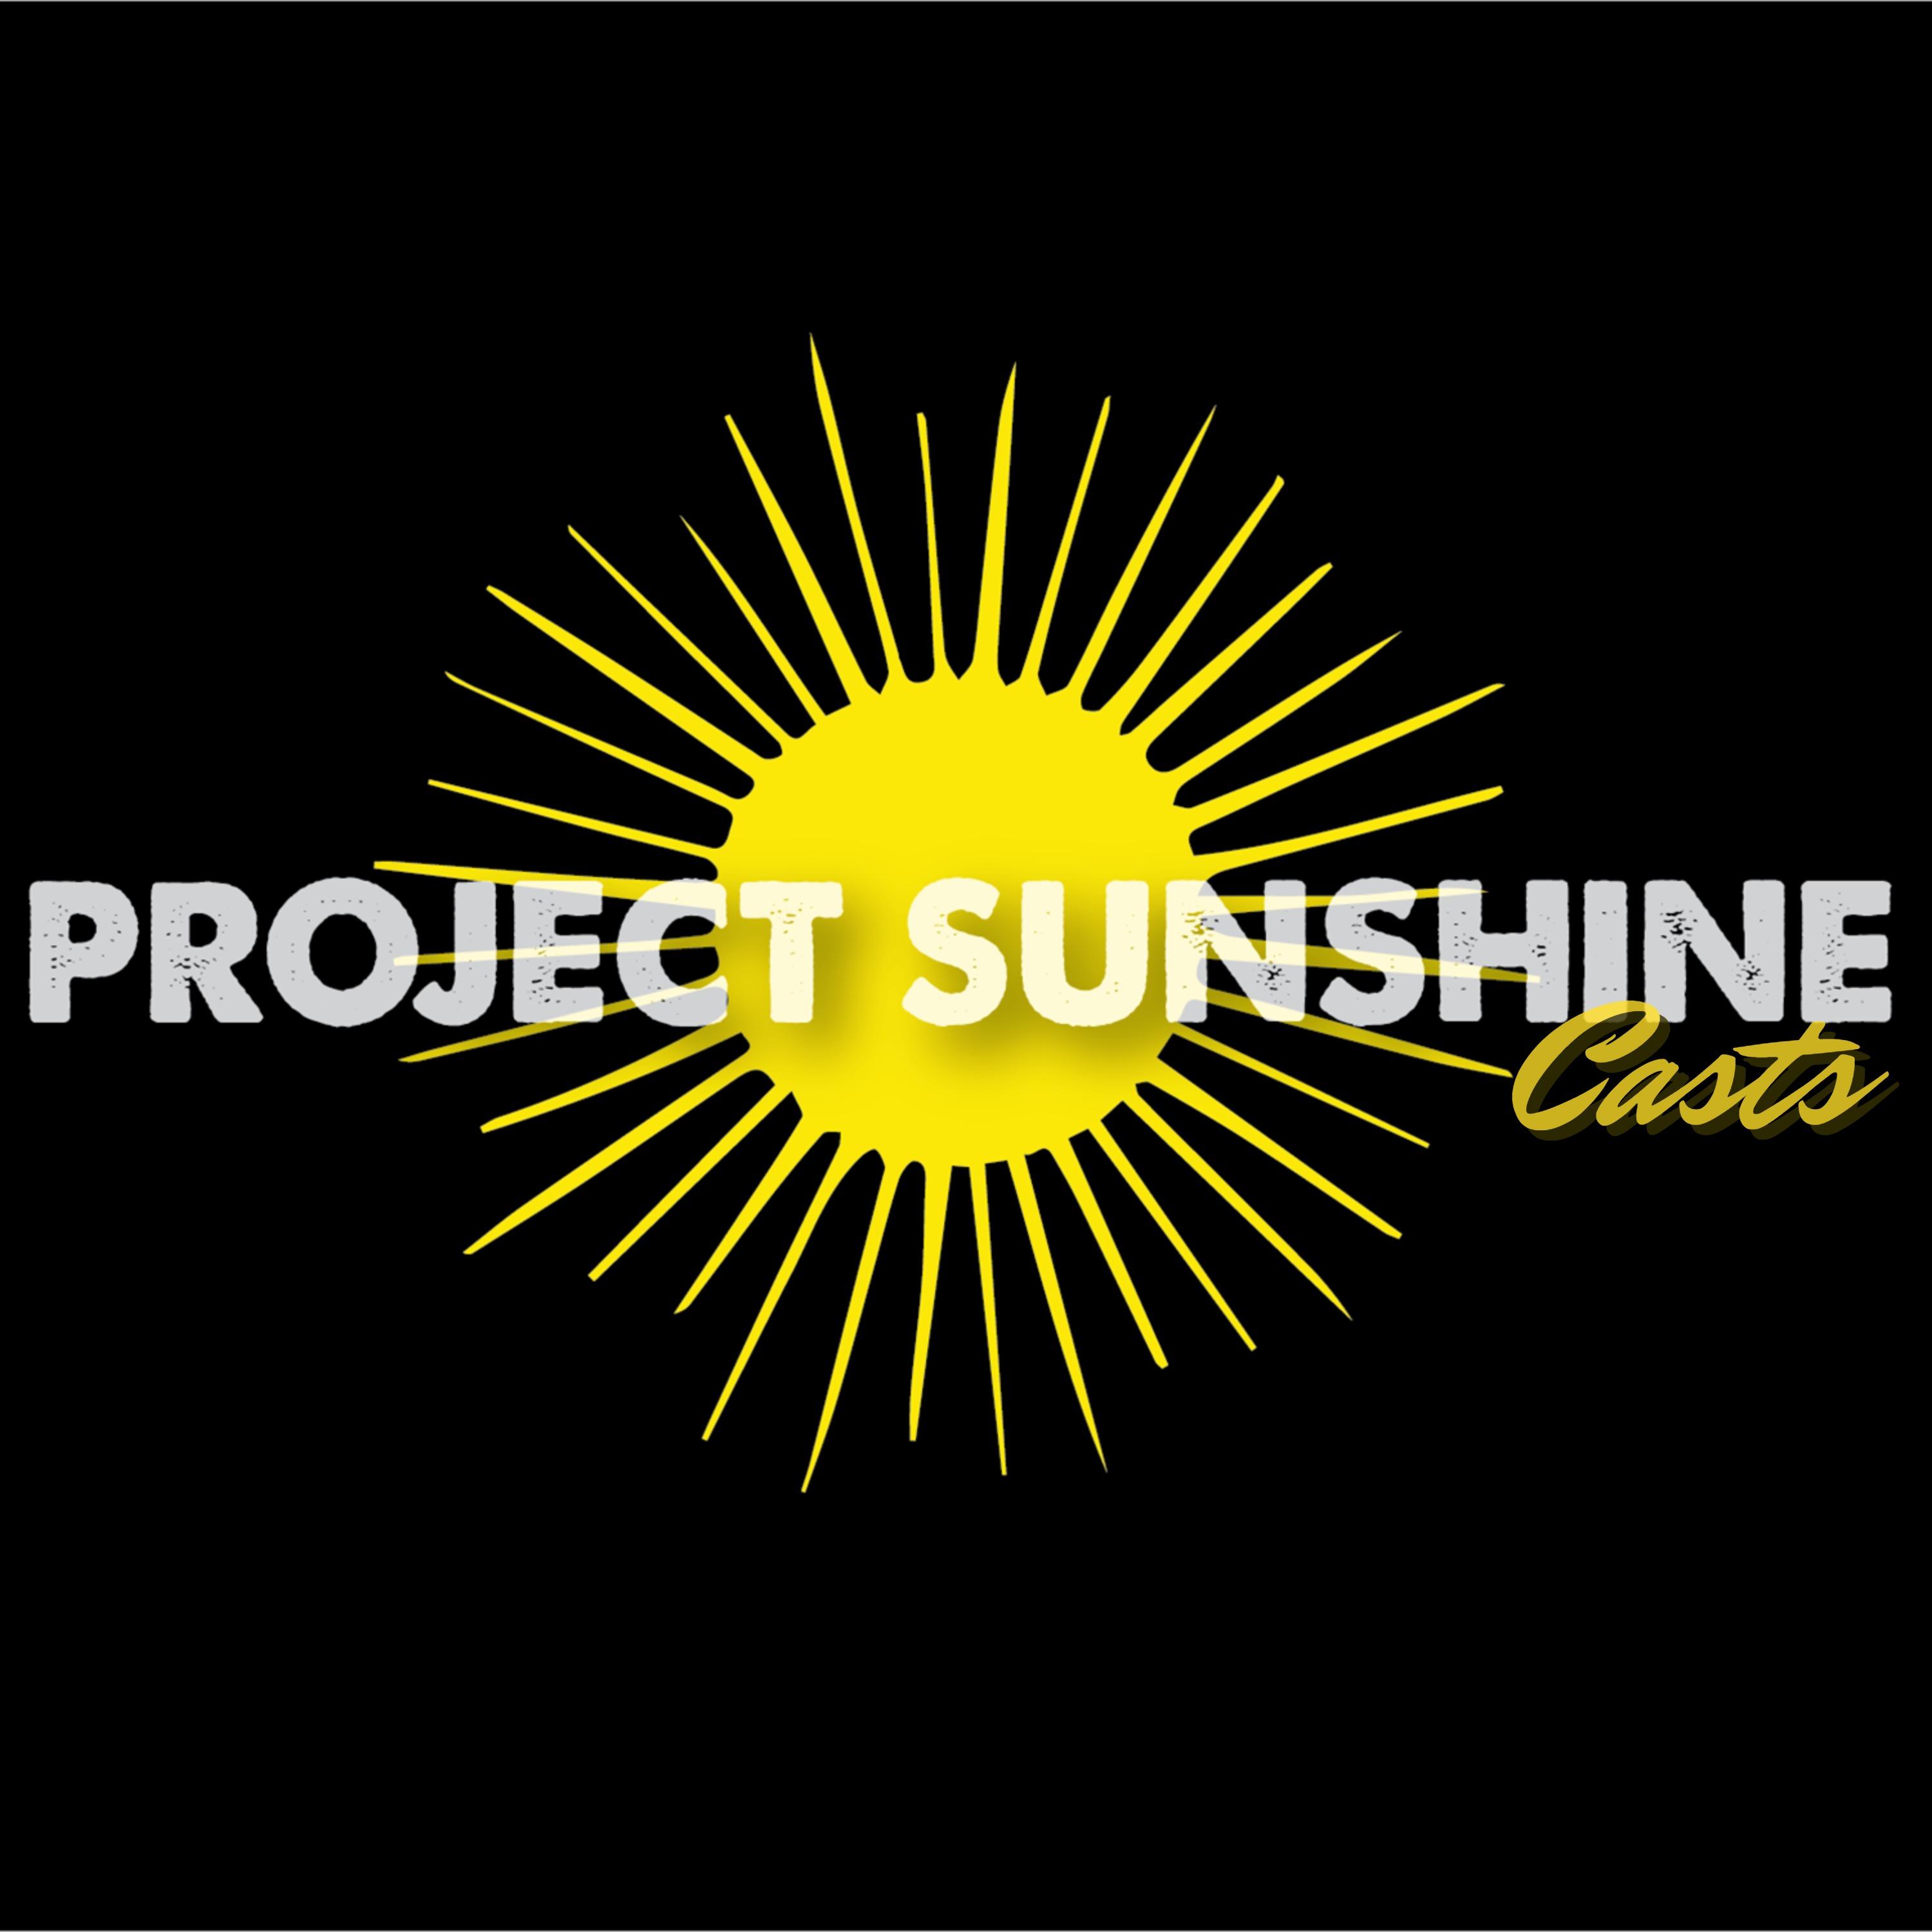 Project Sunshine Casts